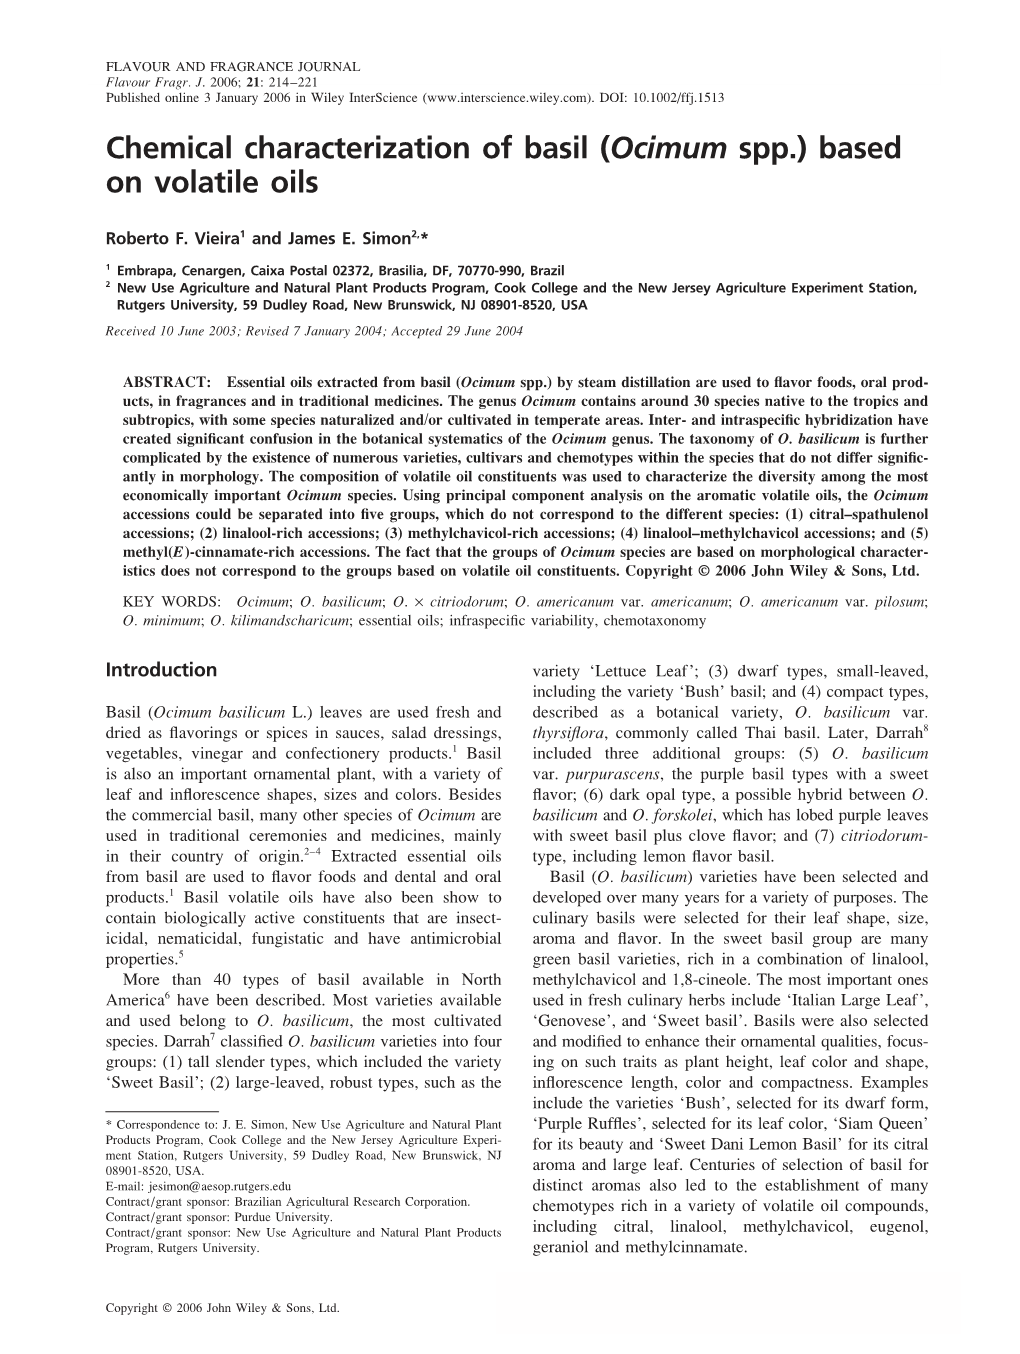 Chemical Characterization of Basil (Ocimum Spp.) Based on Volatile Oils